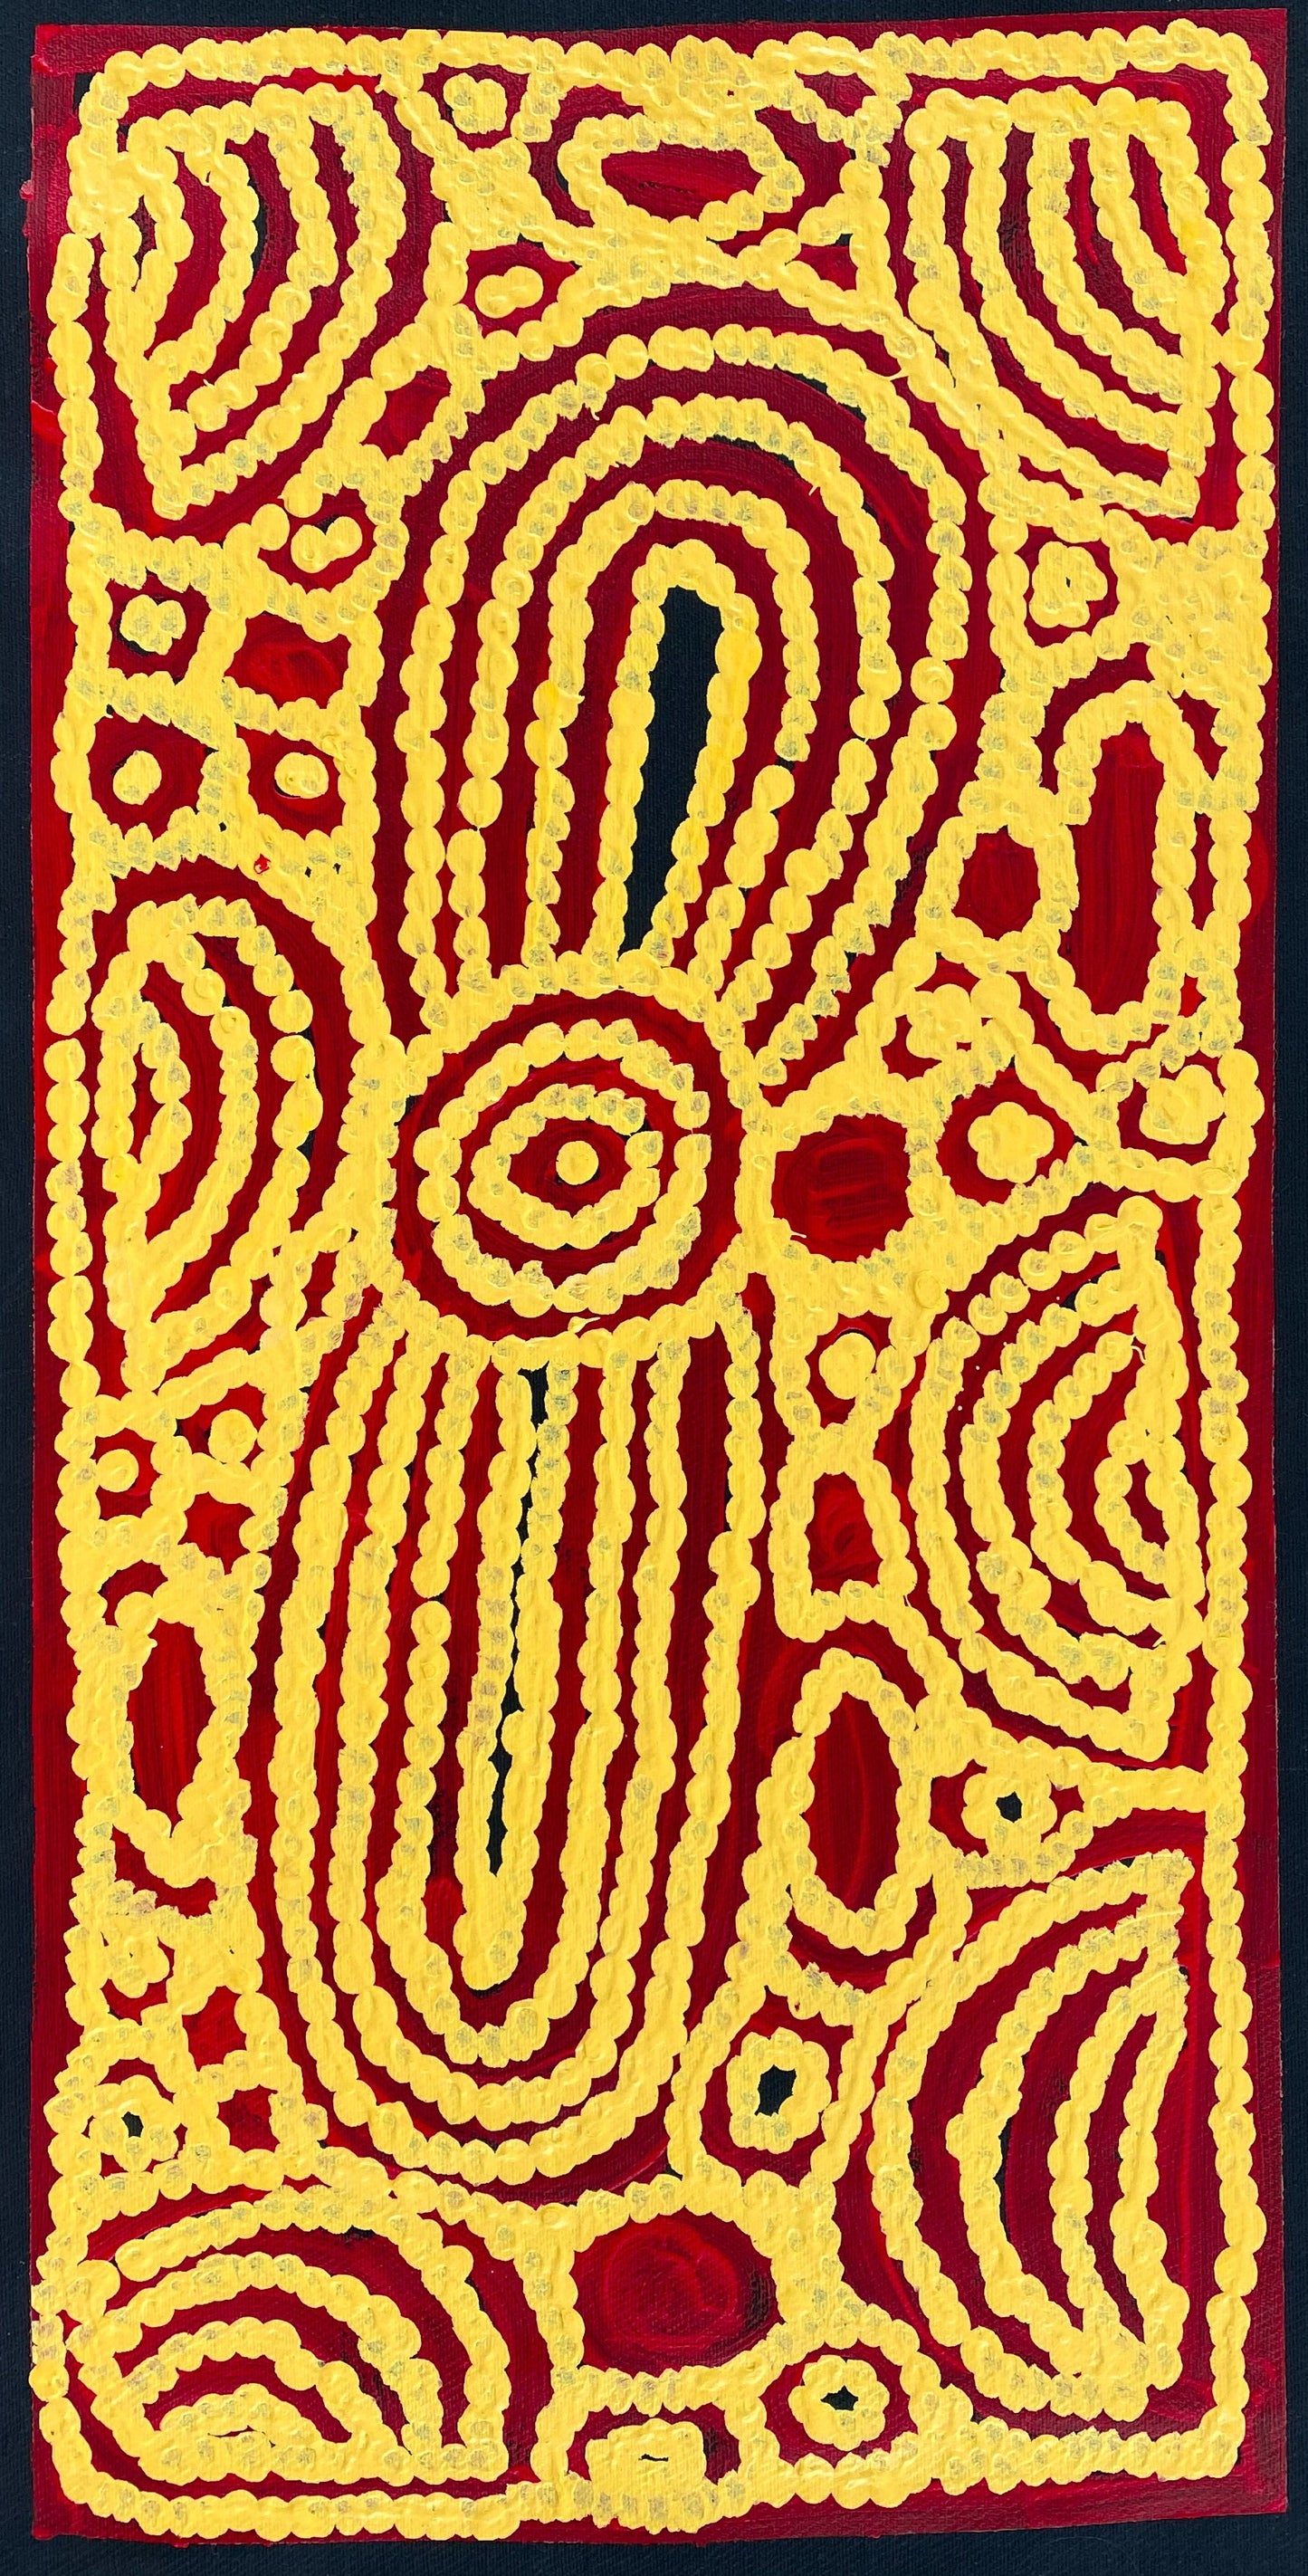 Ningura Naparrula Gibson + Pintupi + Indigenous Art + Aboriginal Art + Traditional Art + Australian Art + Iconography + Symbolism + Darwin Based Gallery + Art Story + Art + Painting 